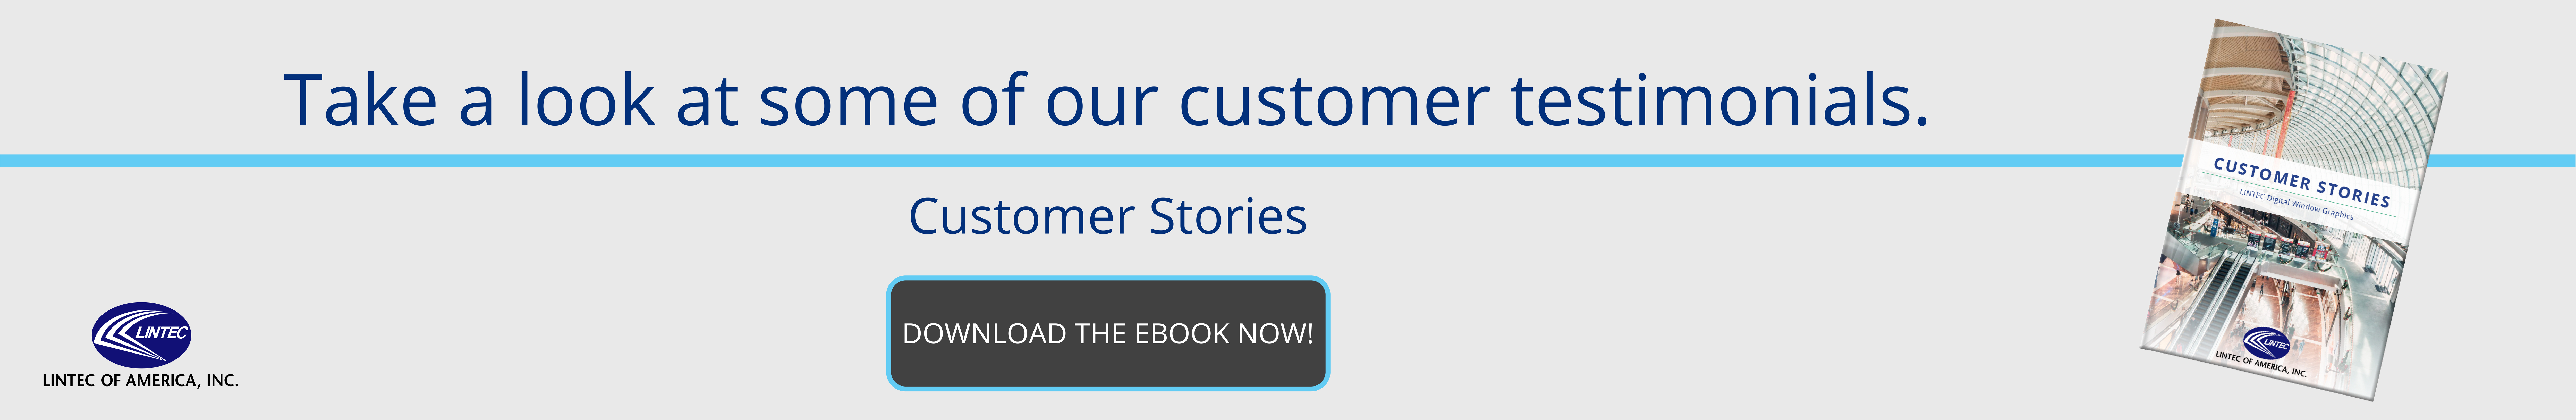 DWG Customer Stories eBook CTA